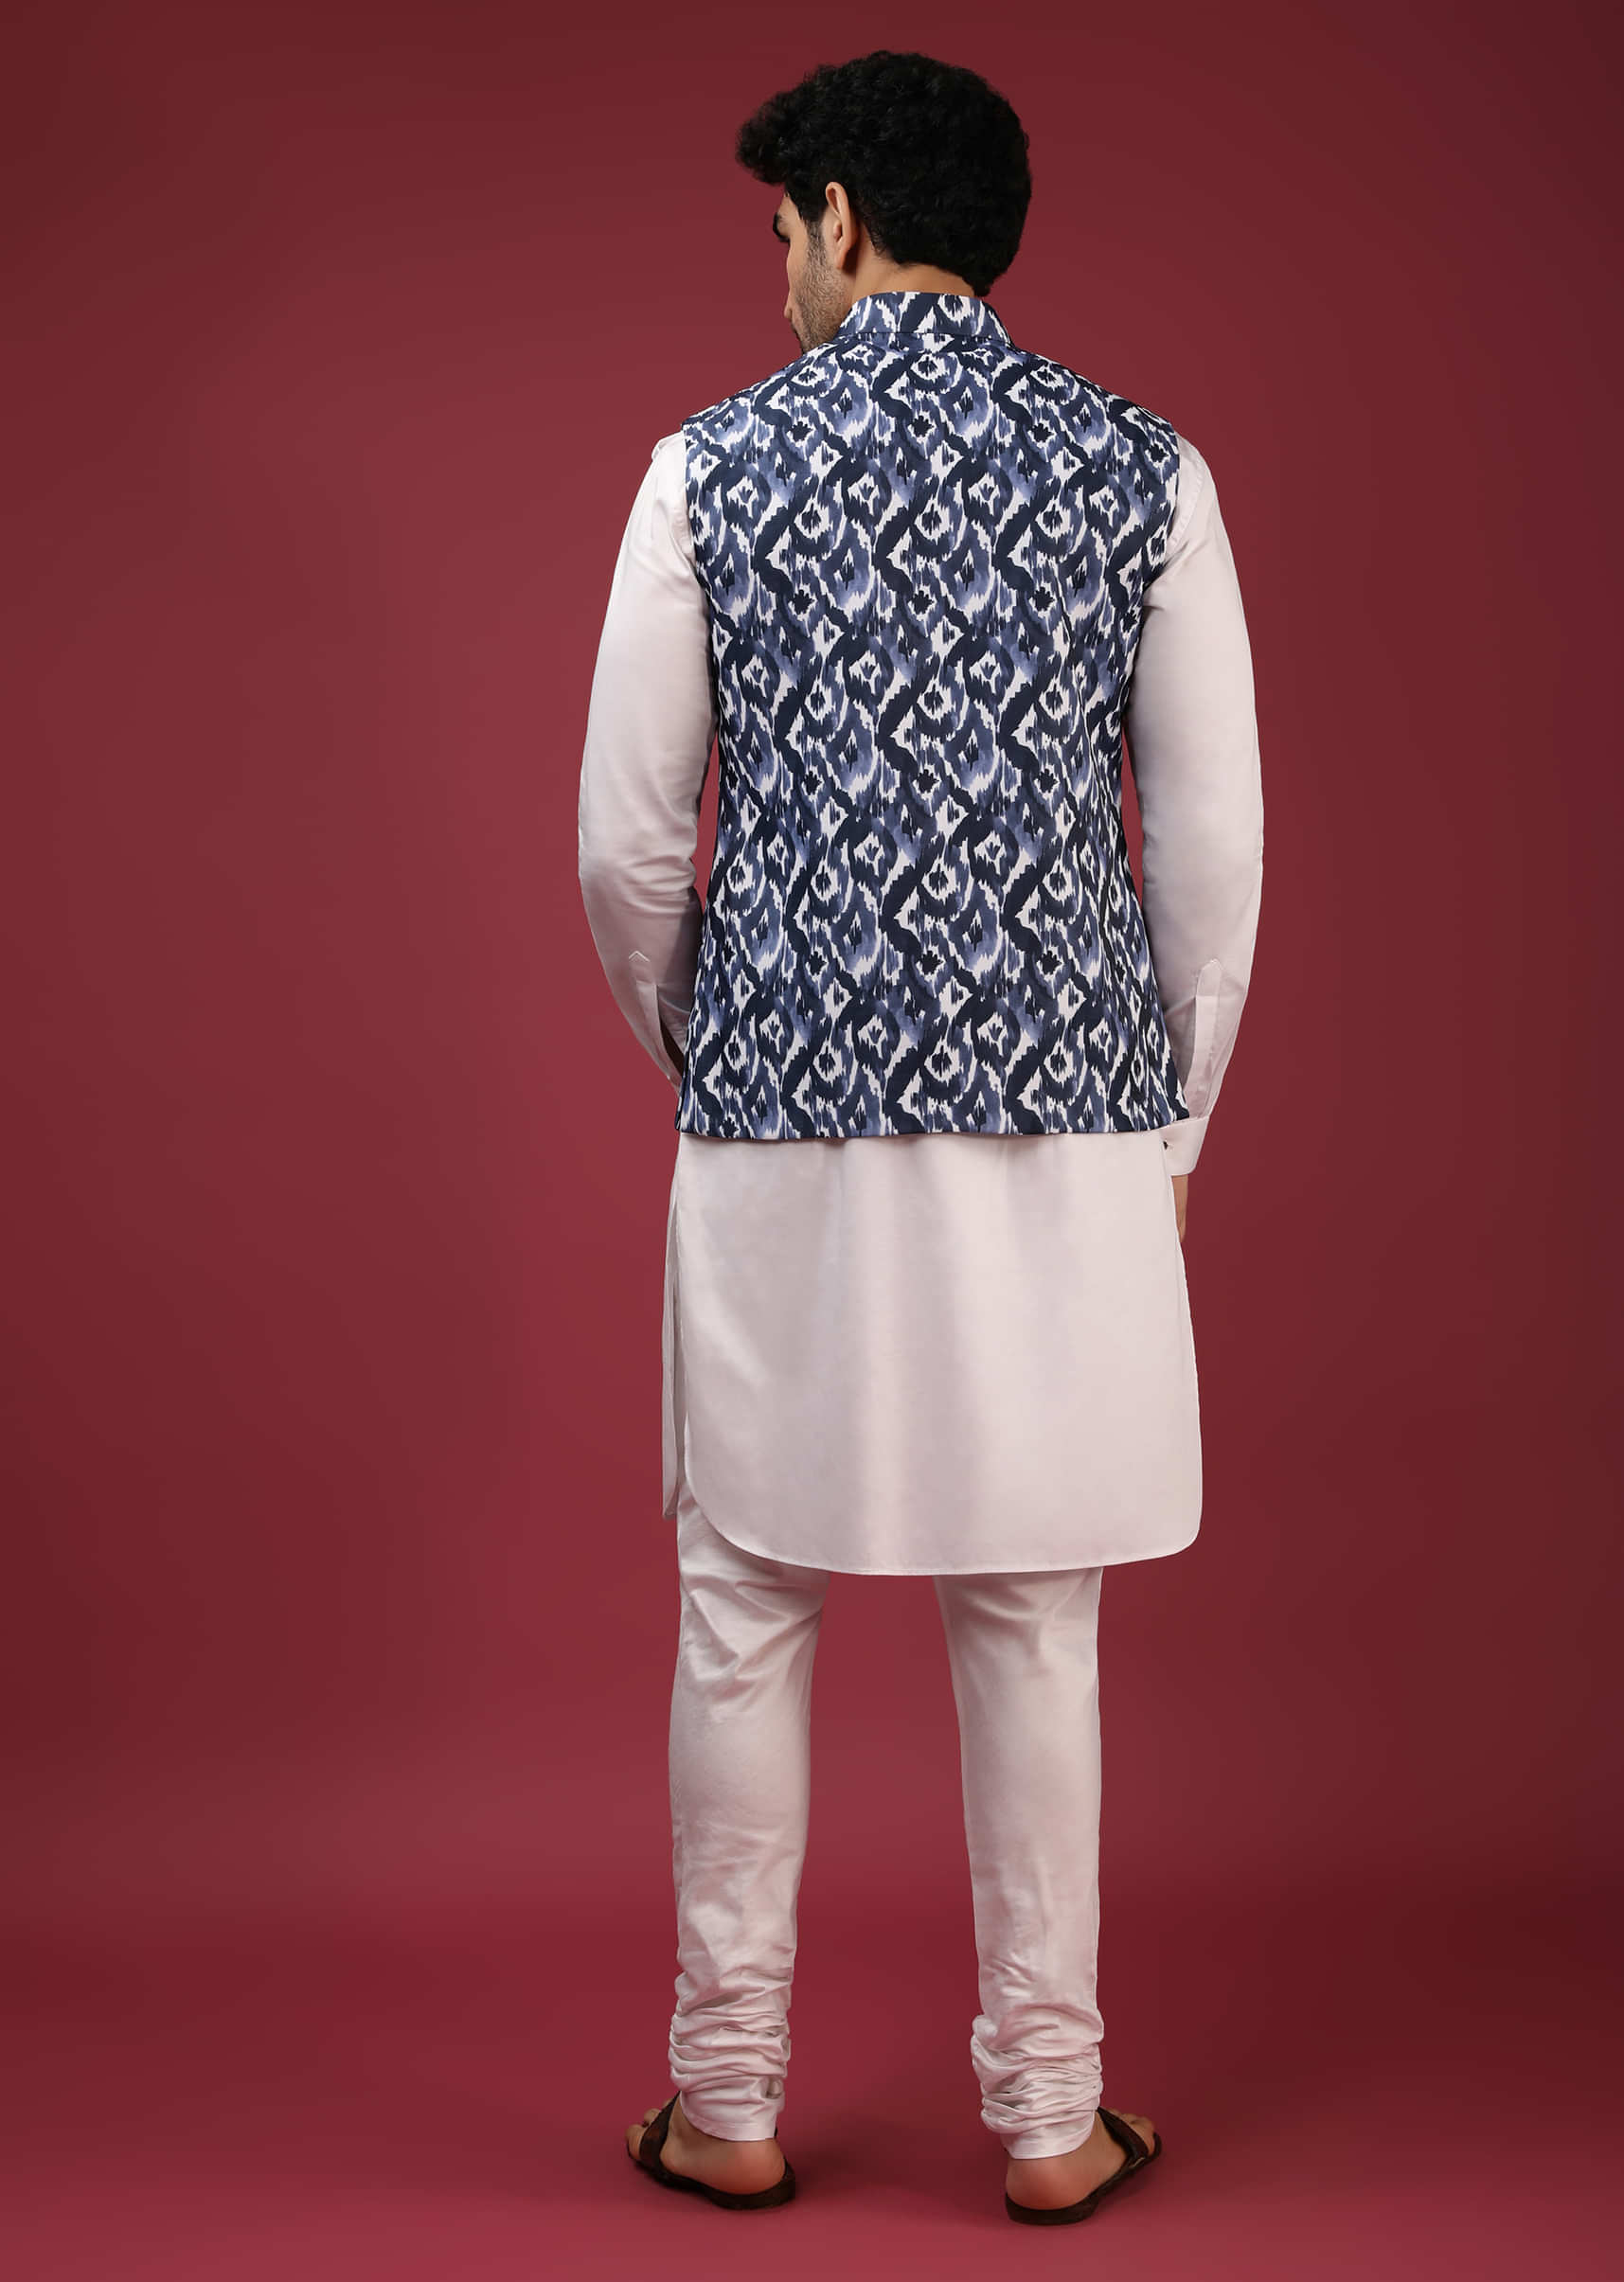 Indigo Printed Nehru Jacket And Kurta Set With Resist Dye Print In Ikkat Motifs And Off Centre Placket  